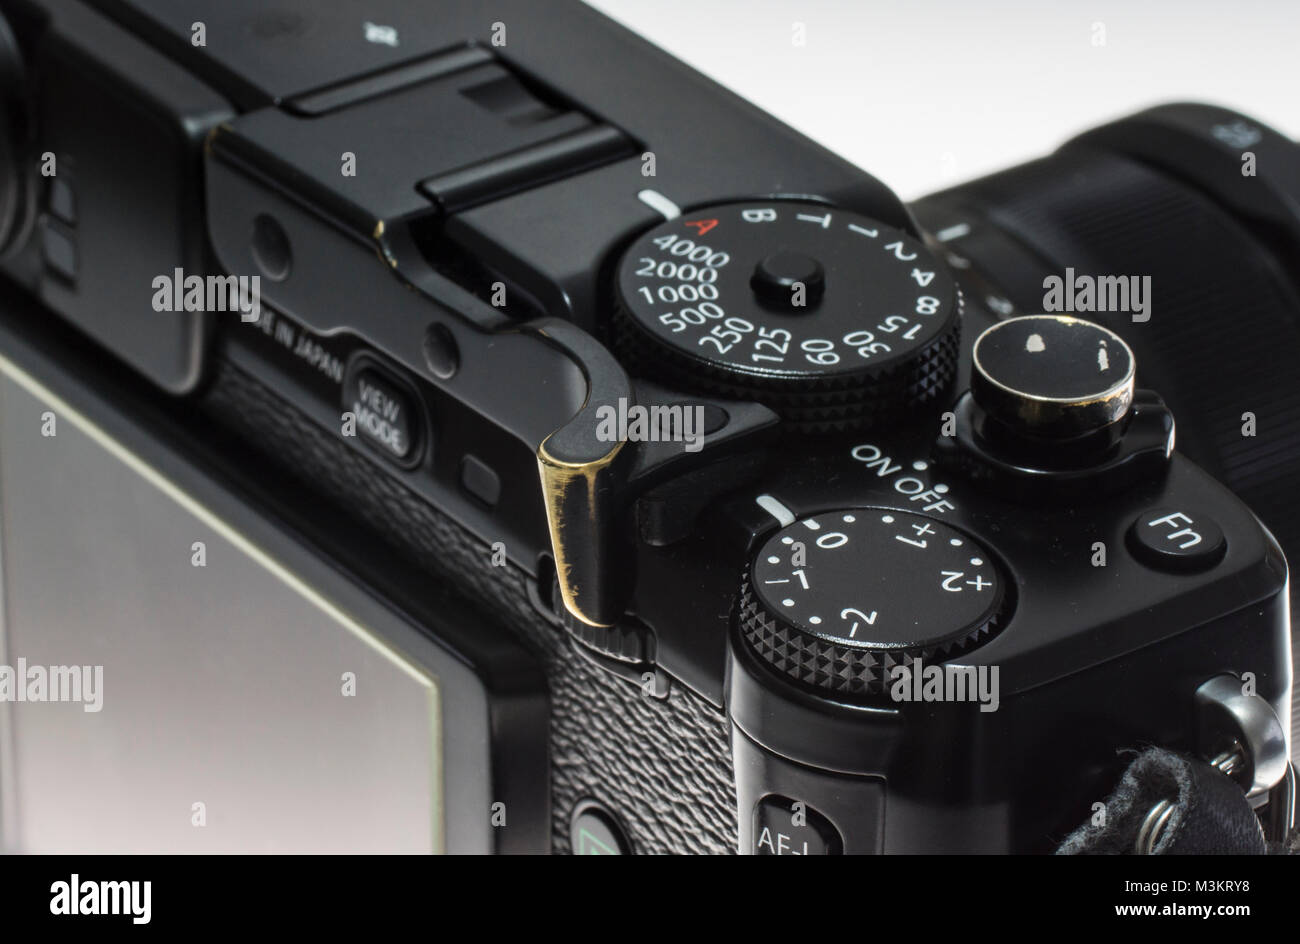 A fujifilm X Pro-1 digital camera Stock Photo - Alamy